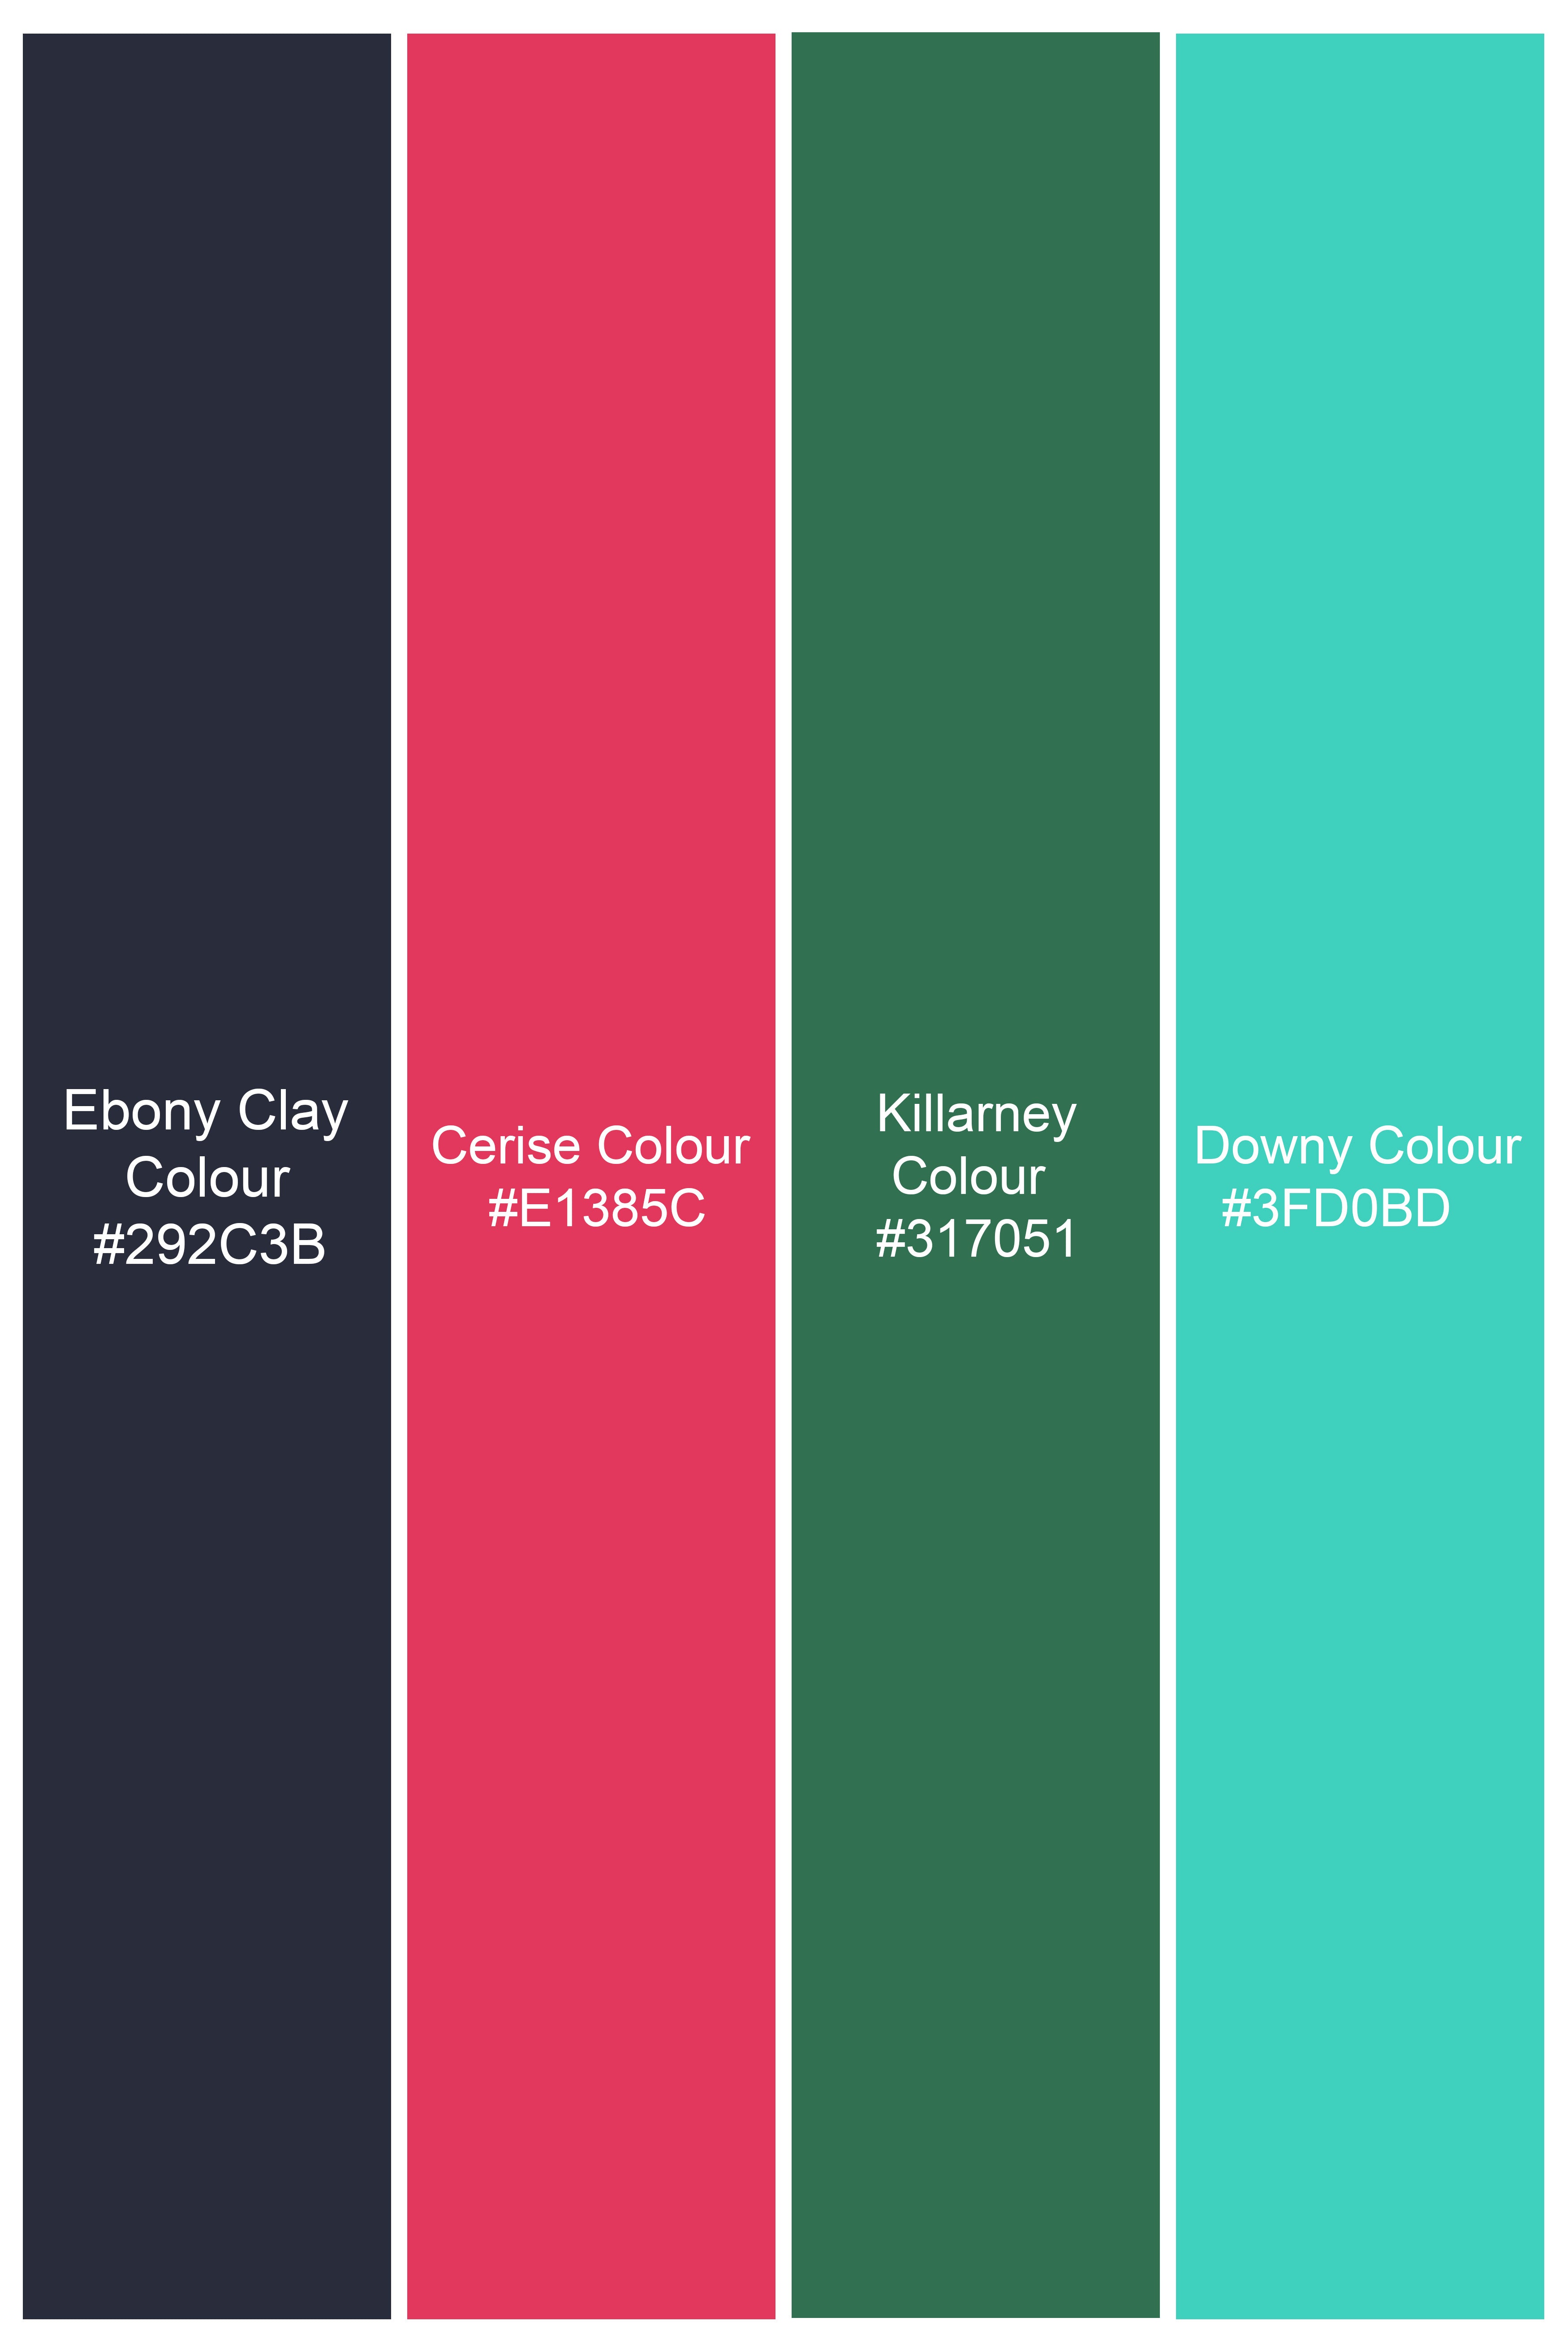 Ebony clay Blue with Cerise Pink Multicolor Floral Printed Premium Cotton Shorts SR358-28, SR358-30, SR358-32, SR358-34, SR358-36, SR358-38, SR358-40, SR358-42, SR358-44